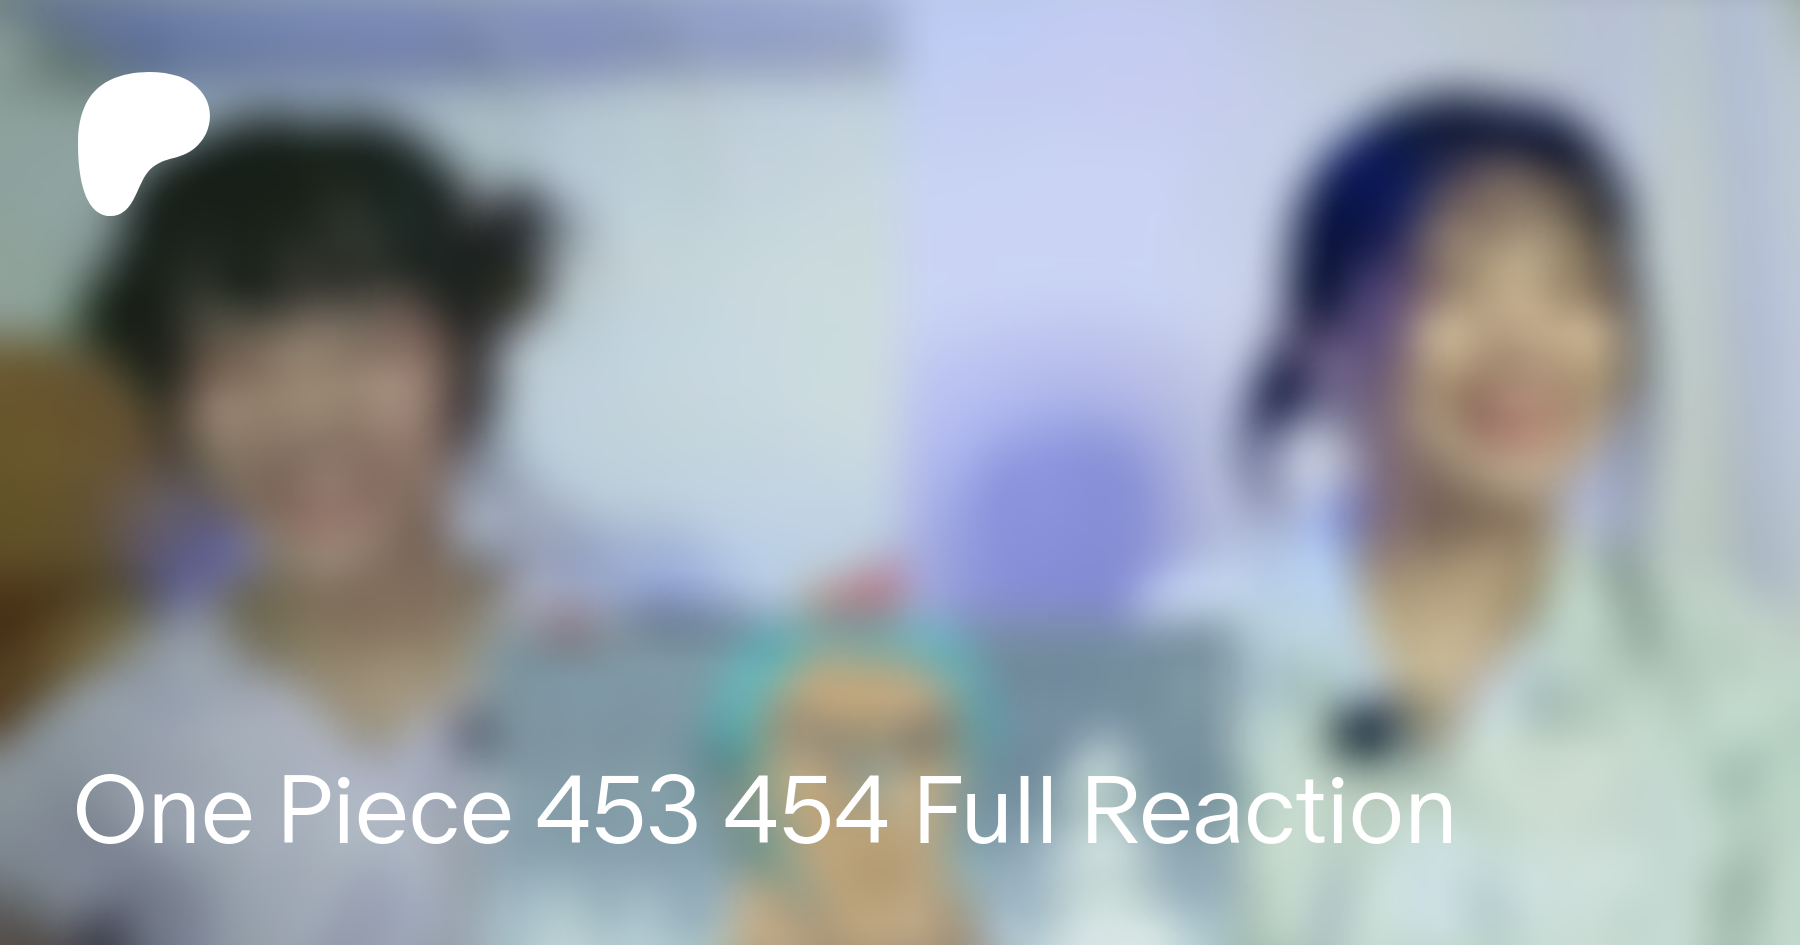 One Piece 453 454 Full Reaction Aira Yuun On Patreon